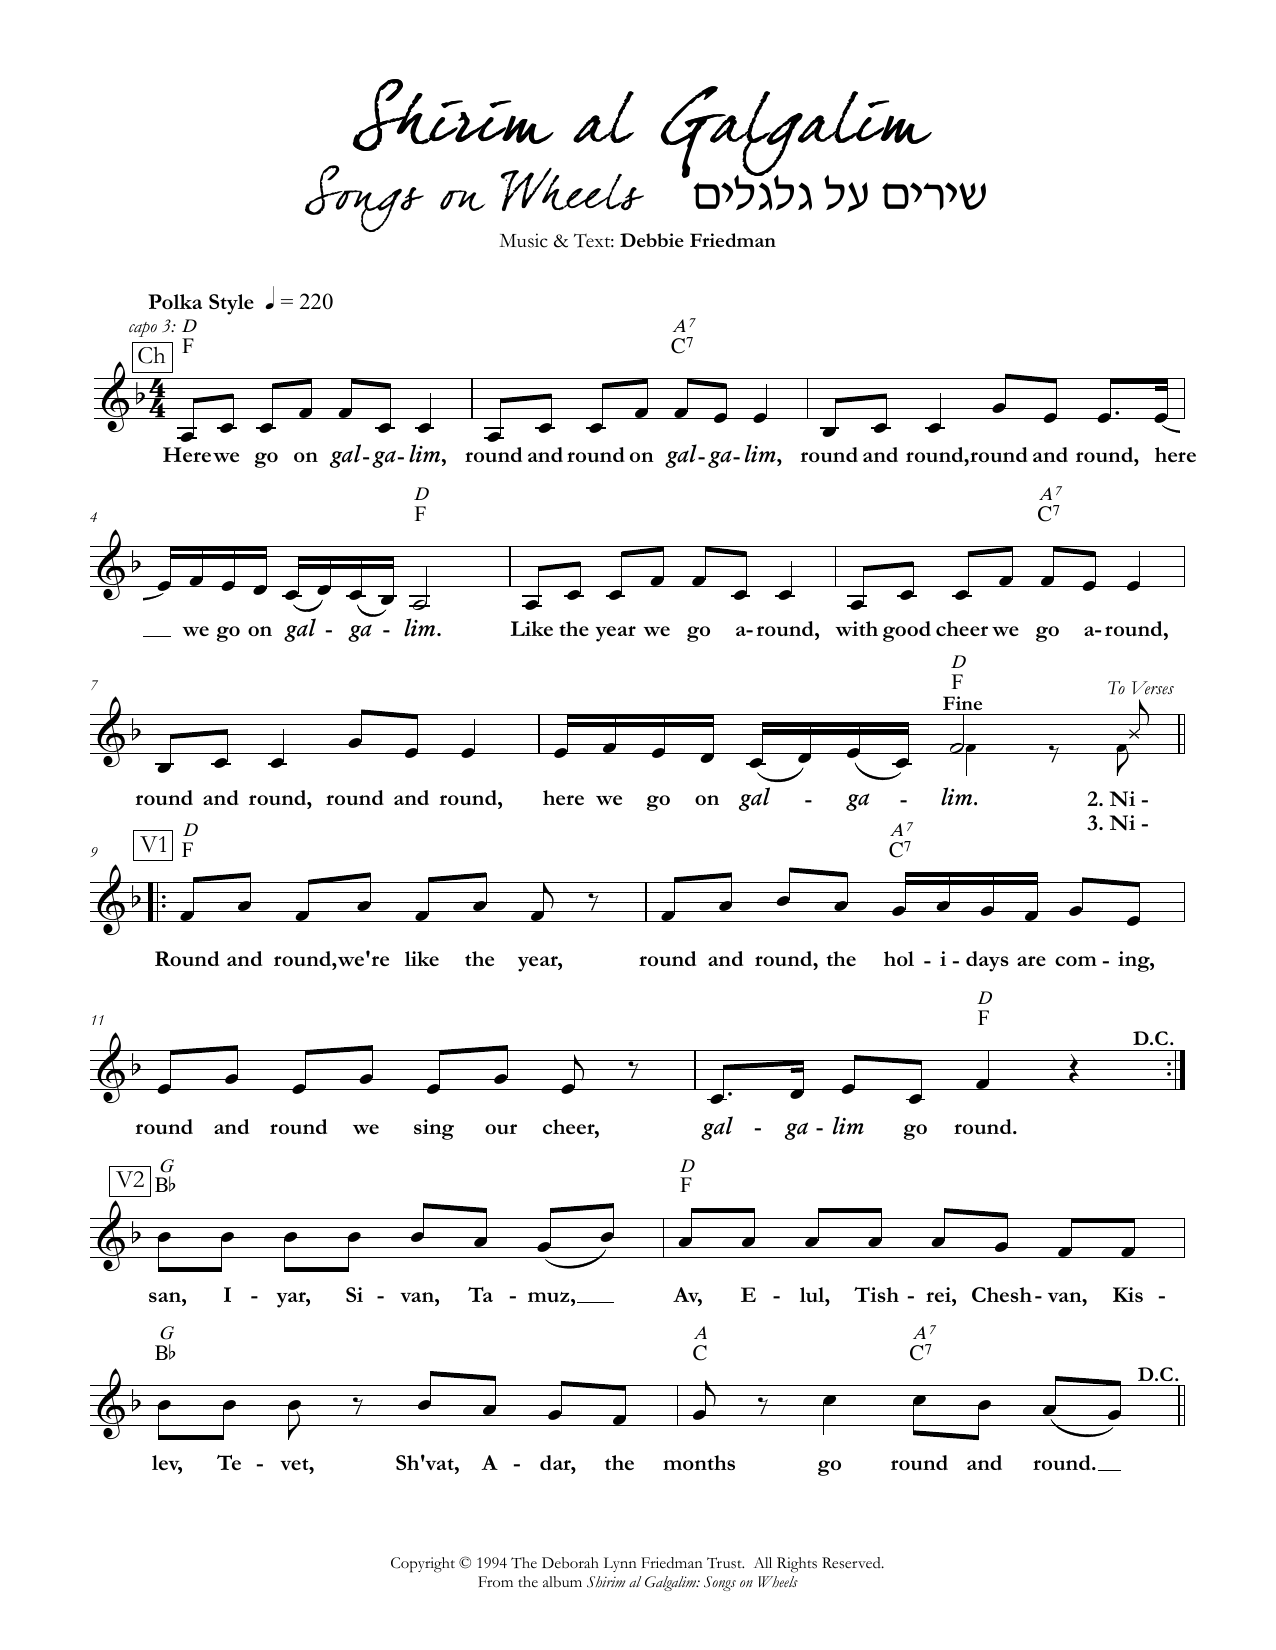 Download Debbie Friedman Shirim al Galgalim: Songs on Wheels Sheet Music and learn how to play Lead Sheet / Fake Book PDF digital score in minutes